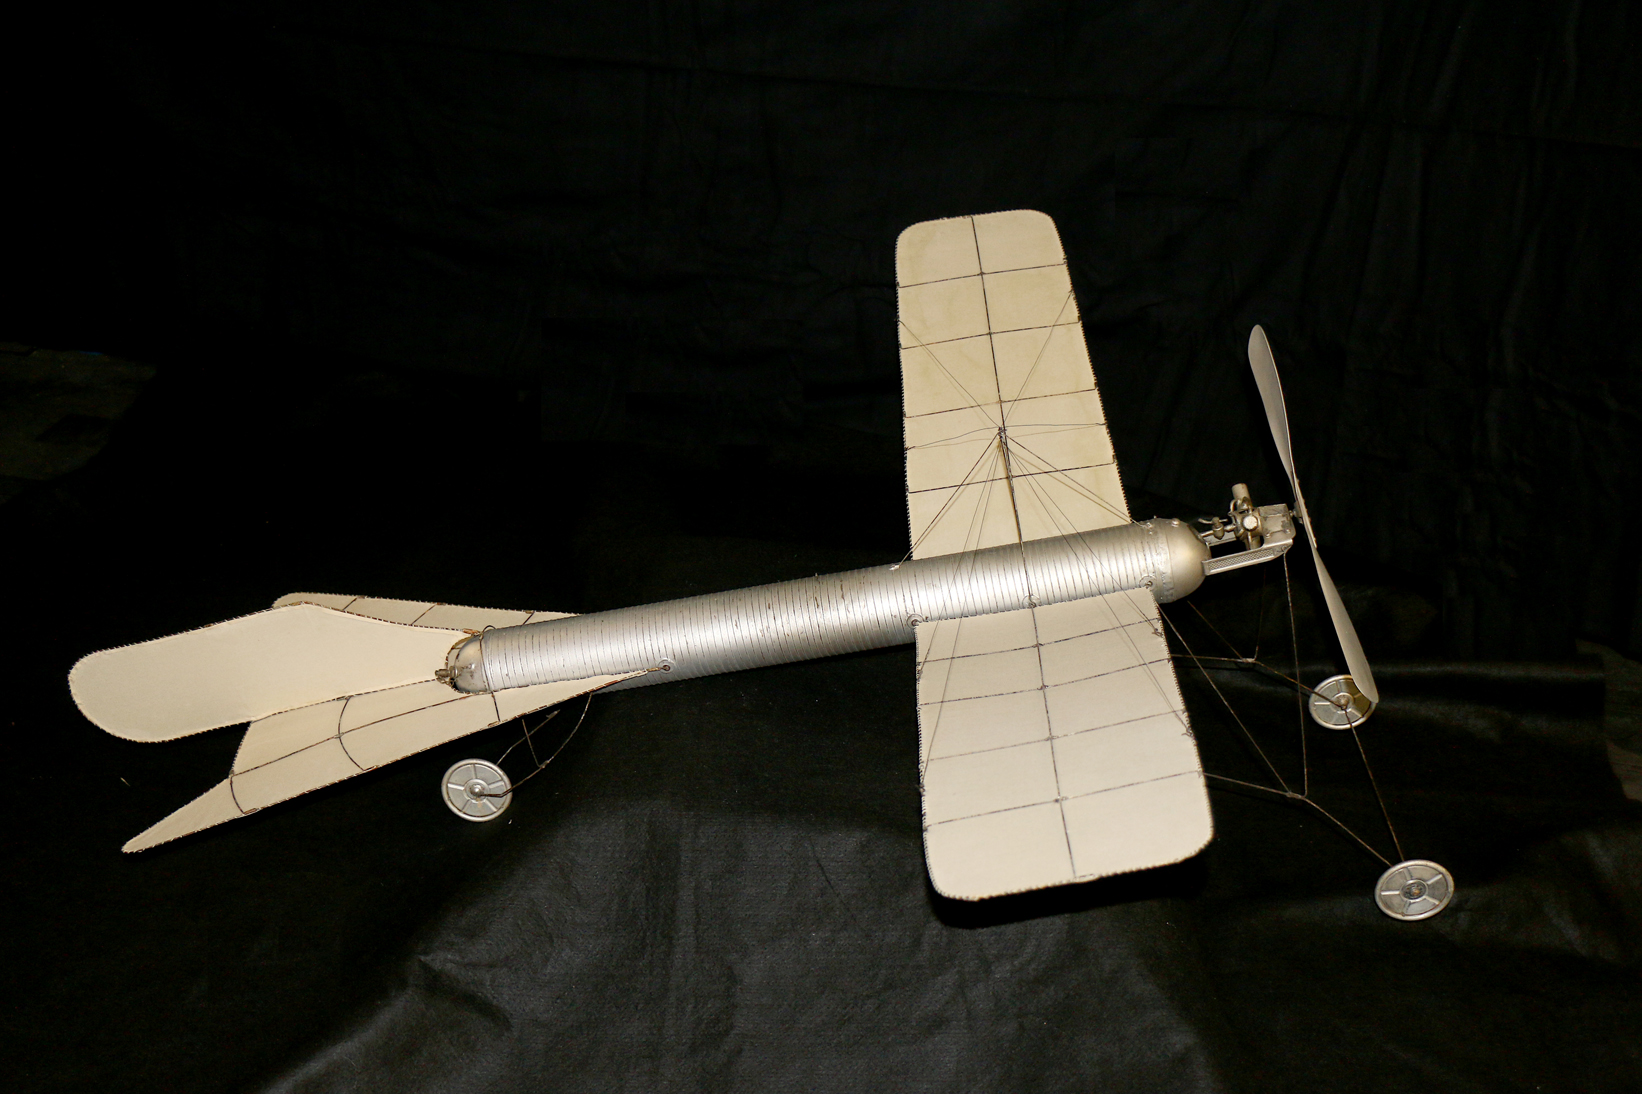 1914 Bing Autoplan Compressed-Air Powered Model Airplane